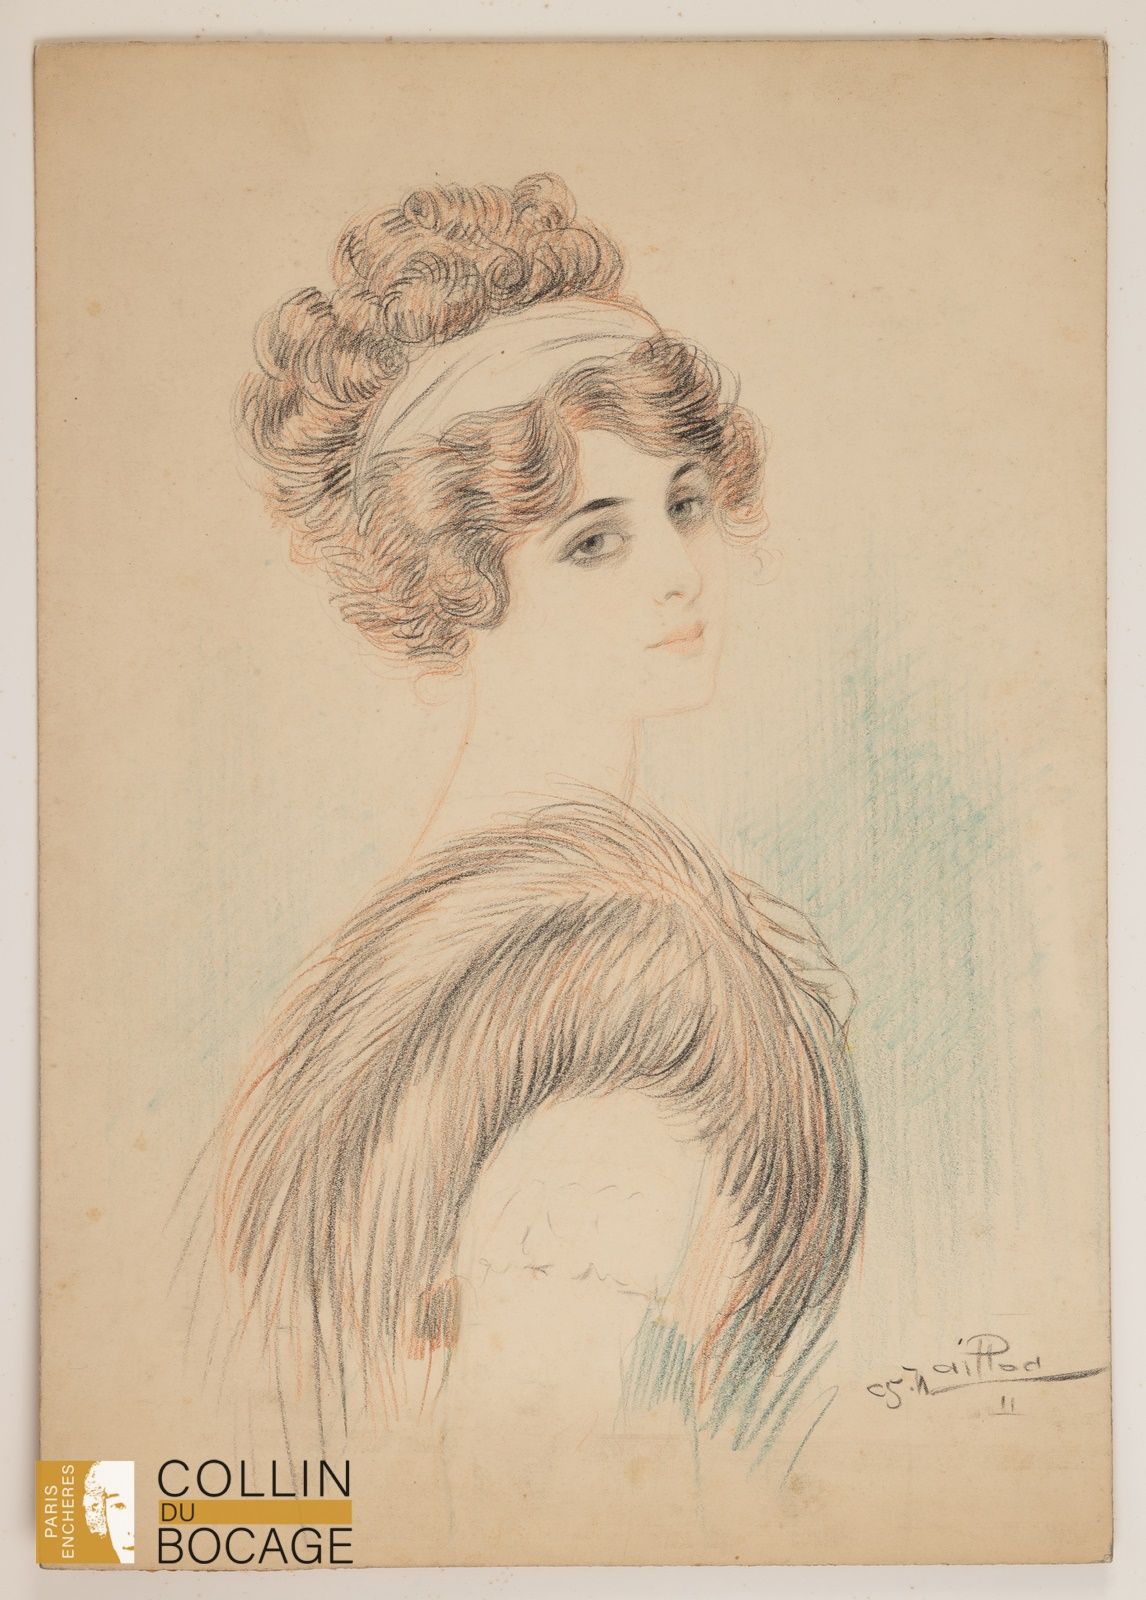 Null 查尔斯-奈洛（1876-1941）
优雅女士肖像
粉彩画
右下方有签名和 1911 年 "11 "的日期
49 x 35 厘米